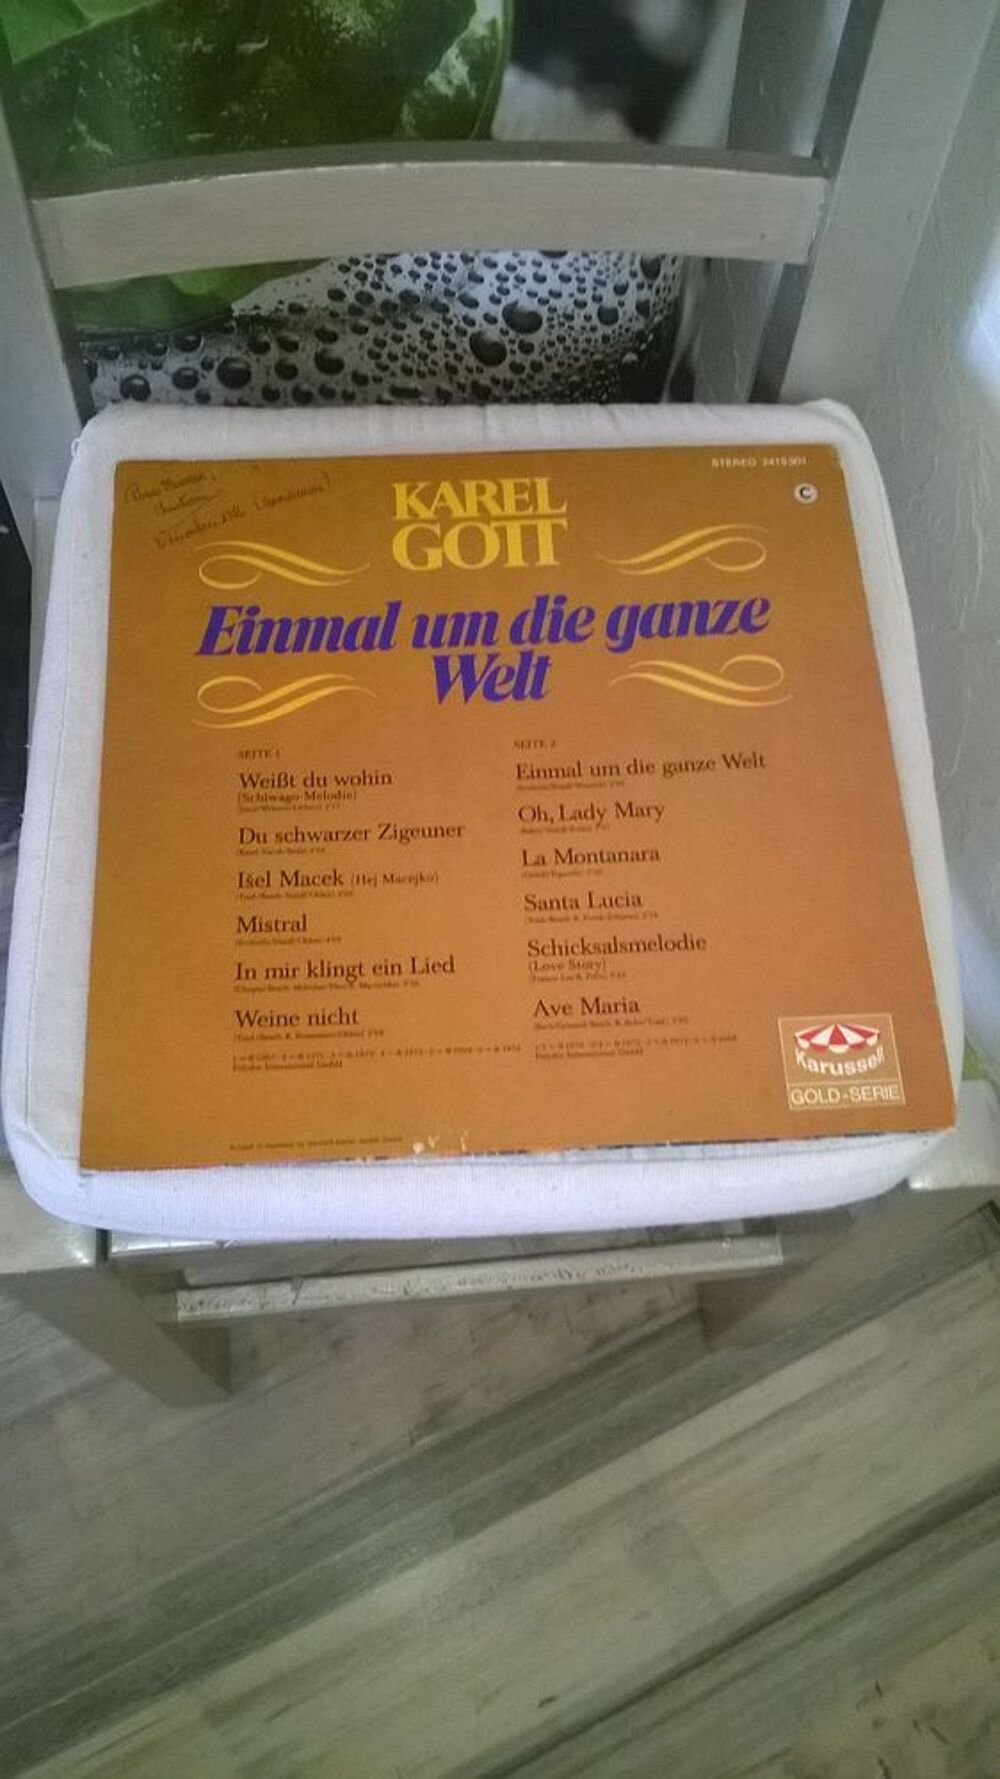 Vinyle Karel Gott
Einmal Um Die Ganze Welt
1974
Excellent CD et vinyles